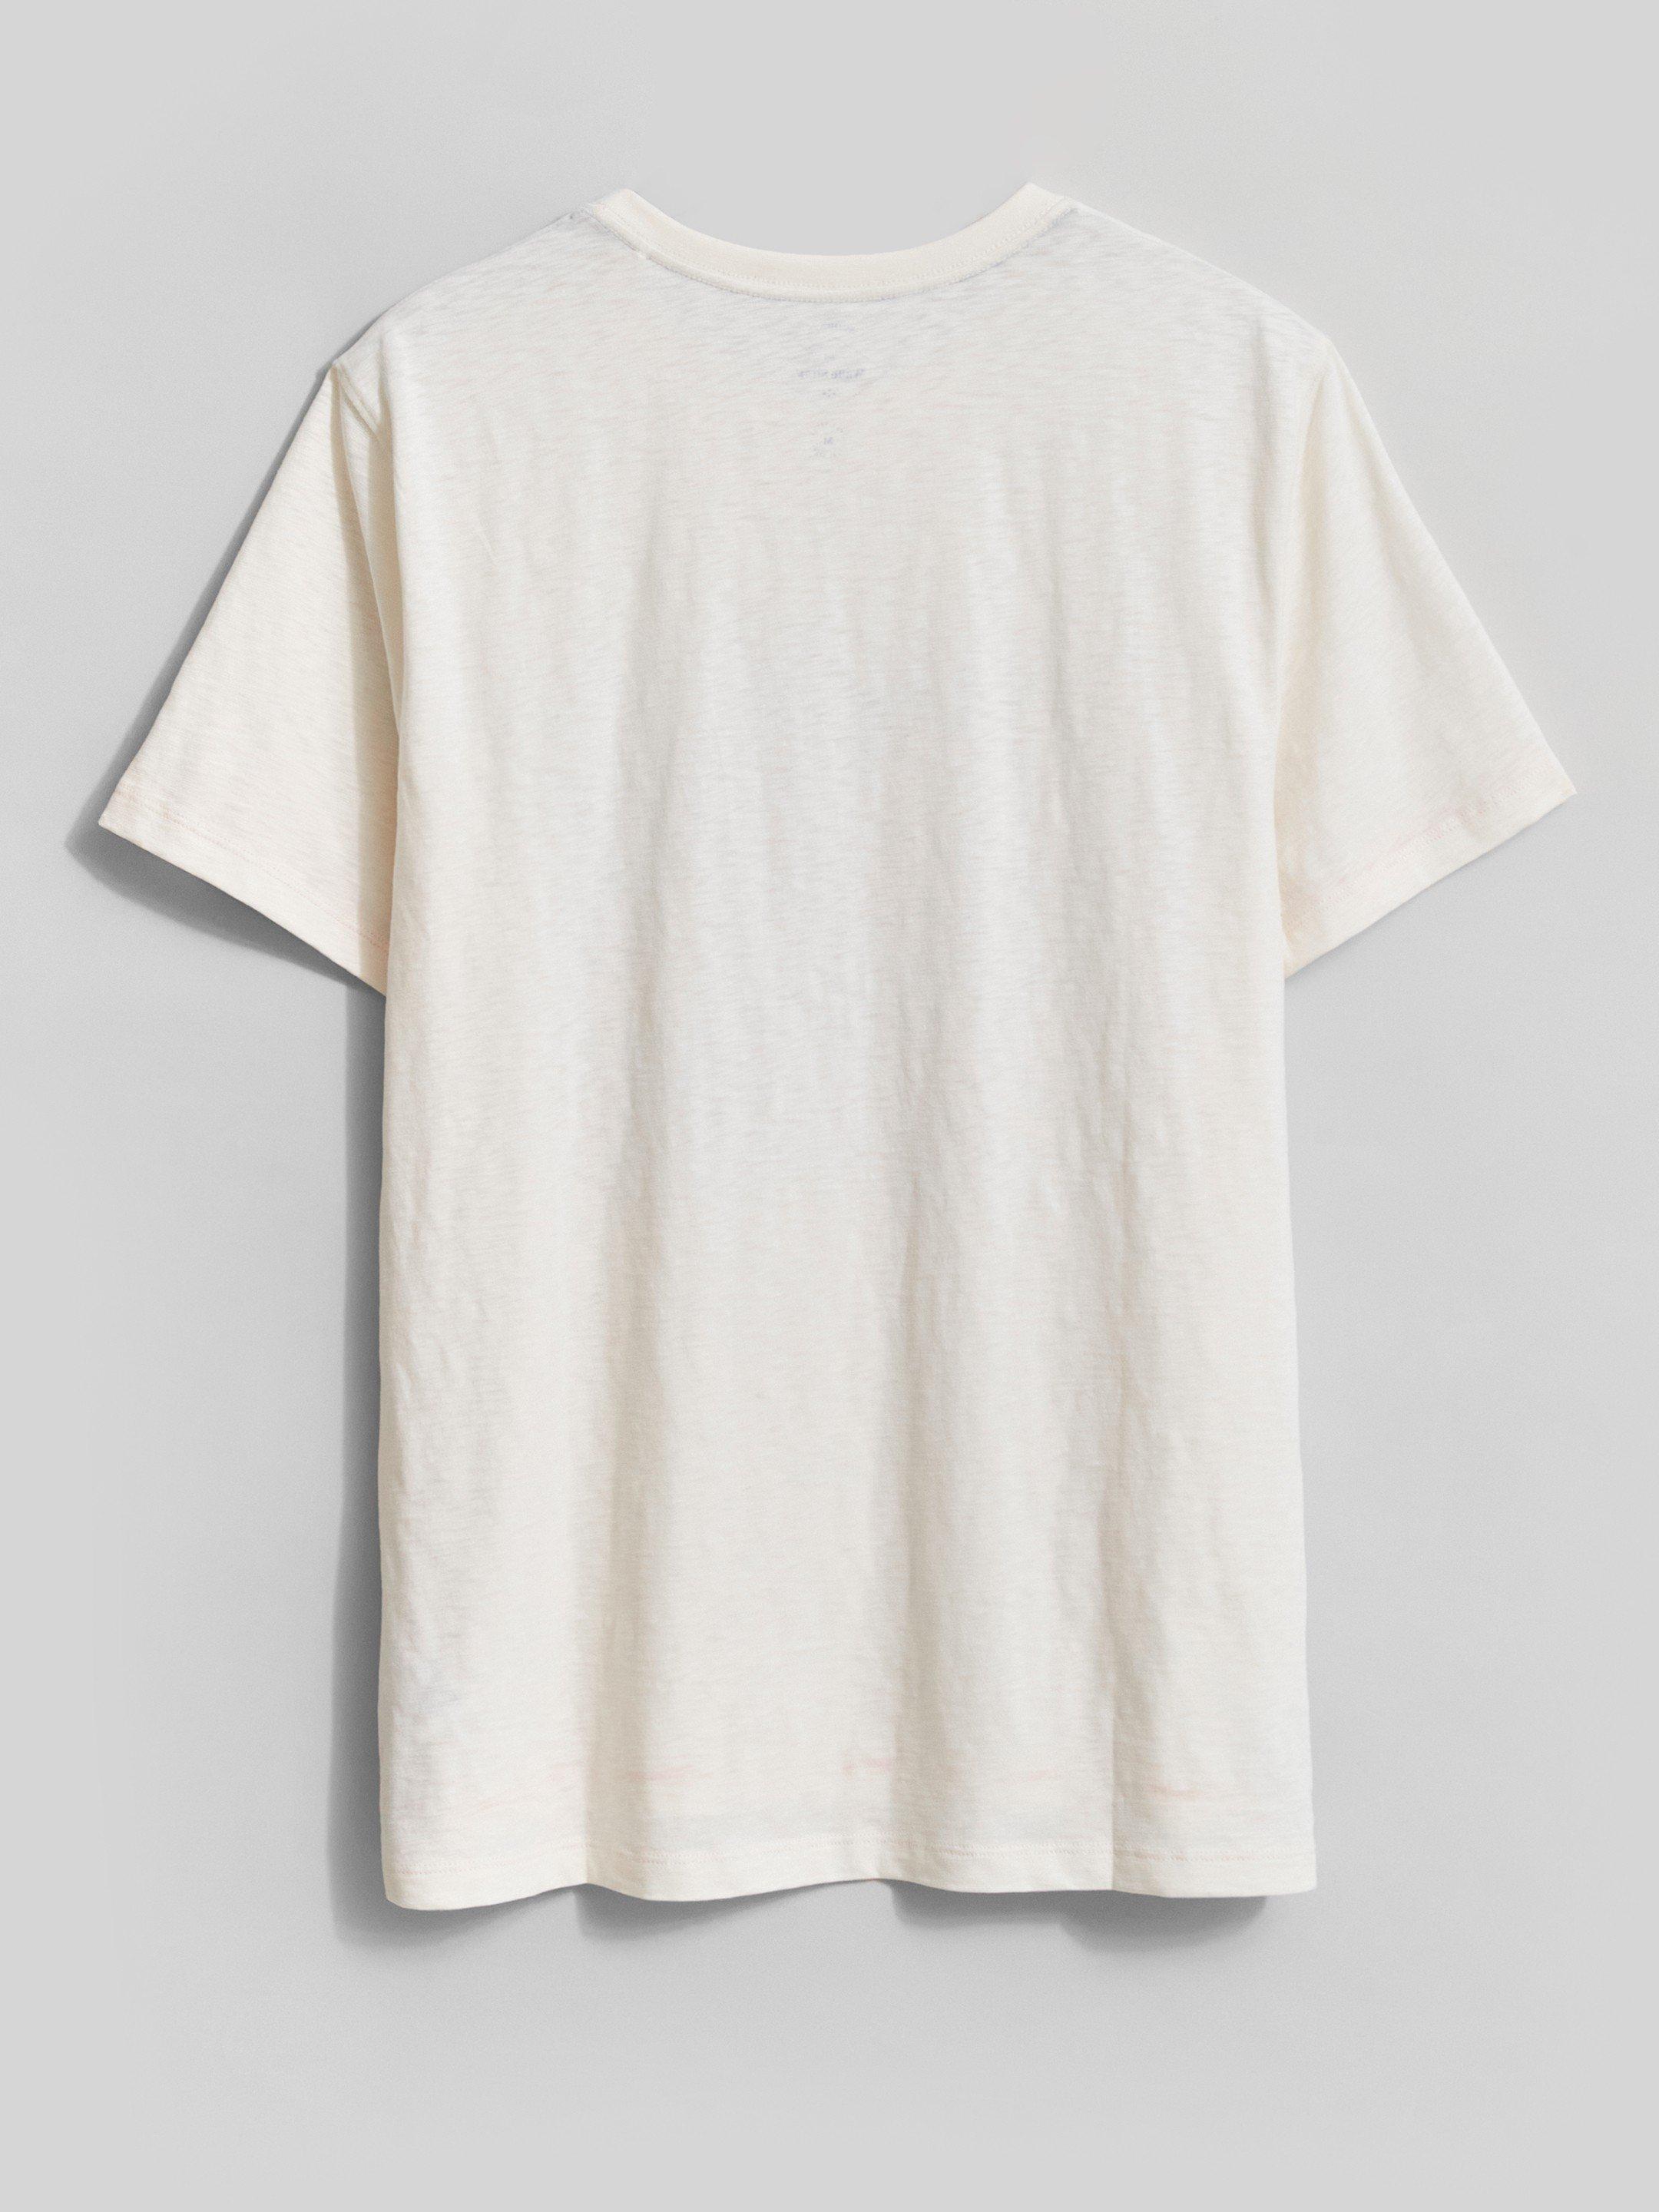 Lagoon Graphic Tshirt in NAT WHITE - FLAT BACK